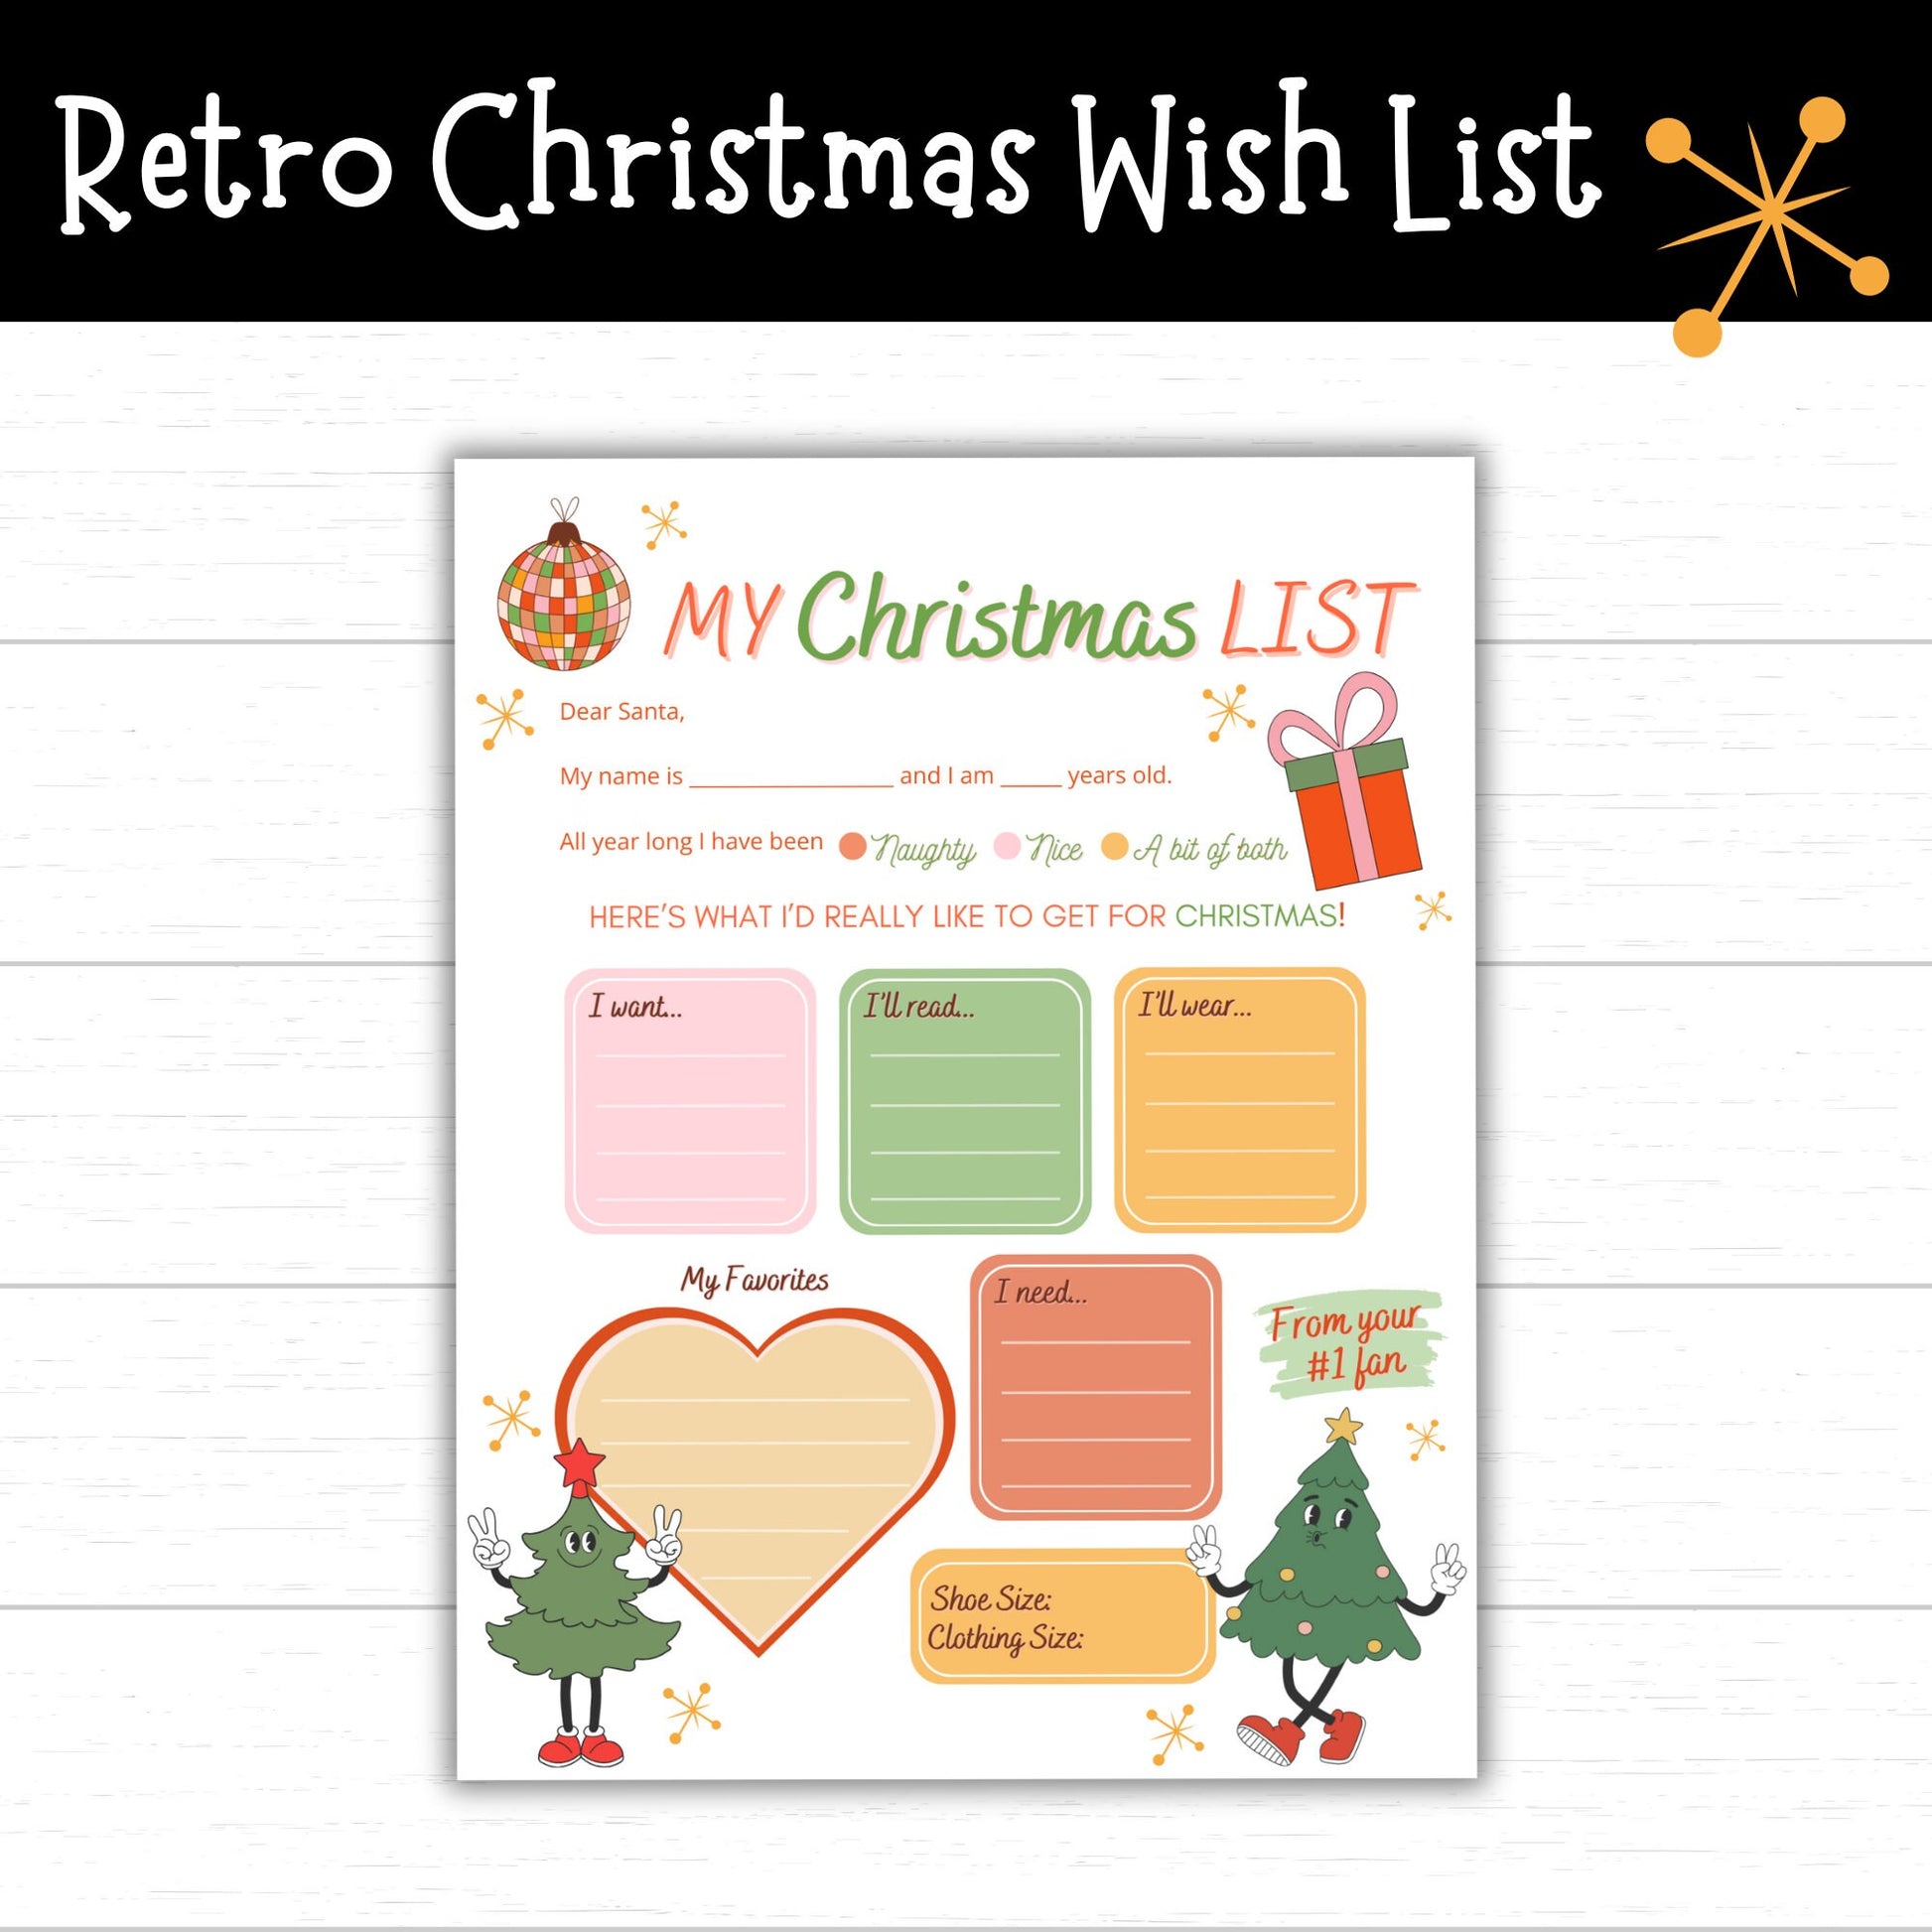 Retro Christmas Wish List to Santa, Christmas Wish List, Vintage Wish List for Kids, Printable Christmas List, Wish List from Kids to Santa